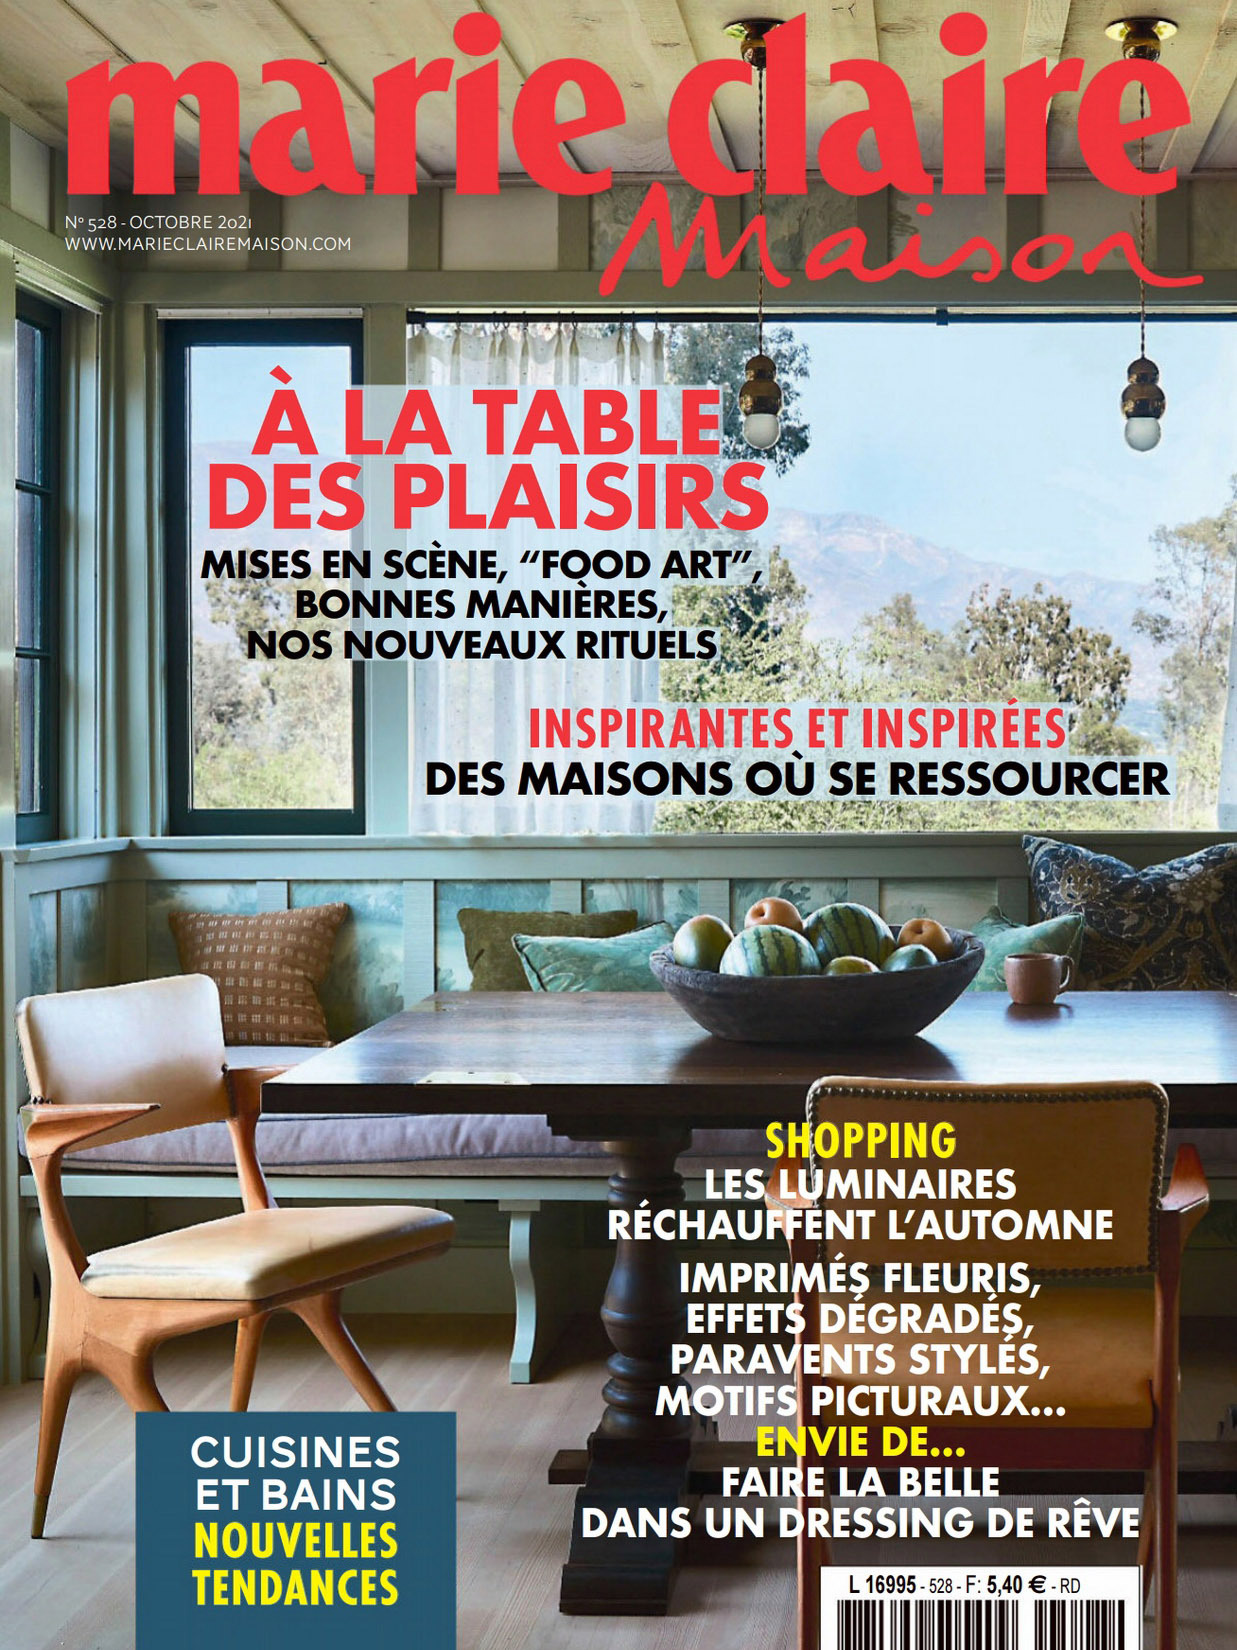 《Marie Claire maison》意大利版时尚室内设计杂志2021年10月号